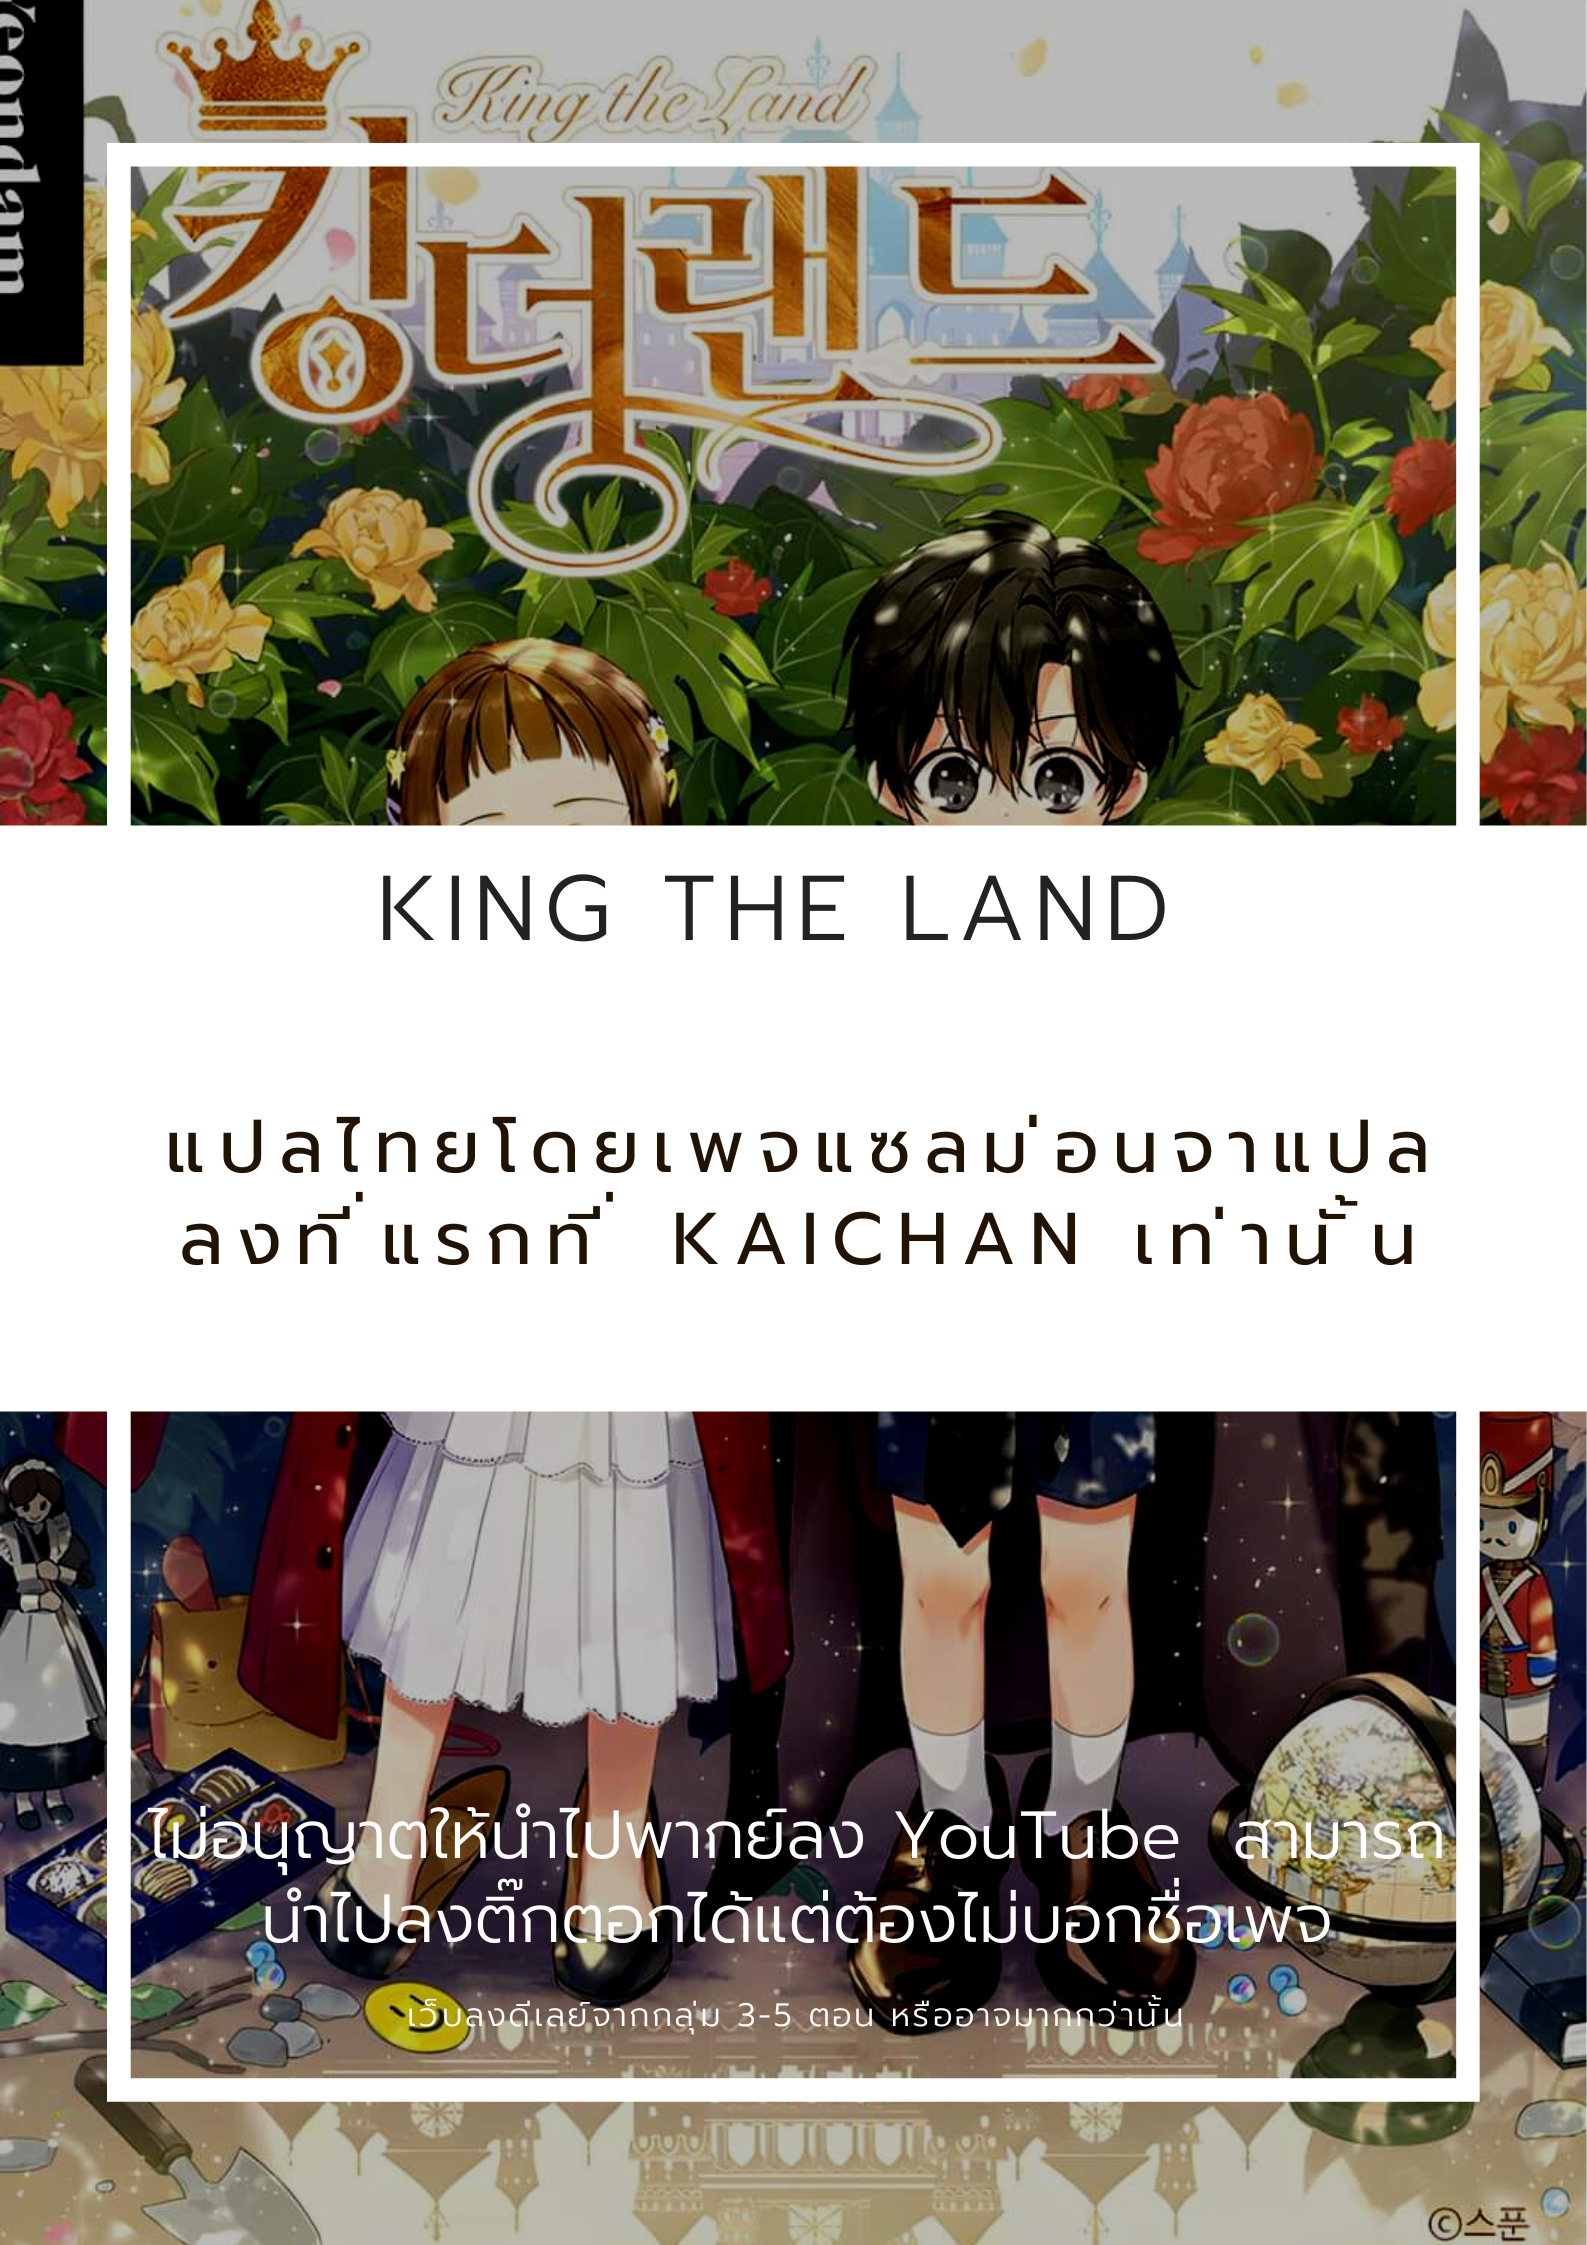 King the land ตอนที่ 1 (1)